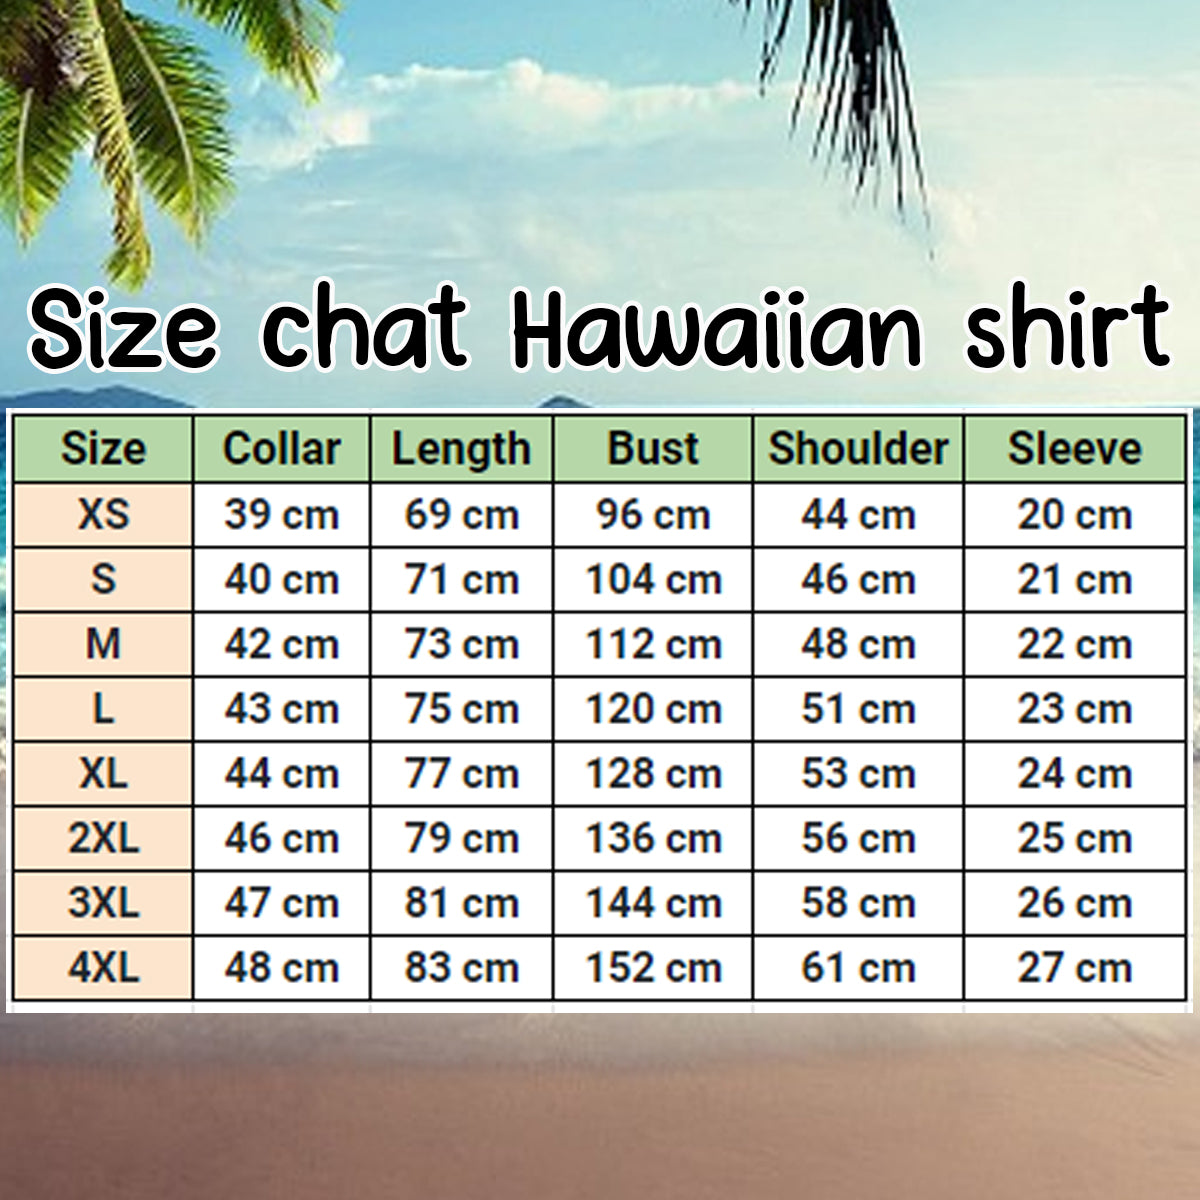 Turtle hawaiian shirt for men/ women/ Turtle Dark Turquoise And Black Hawaiian Shirt